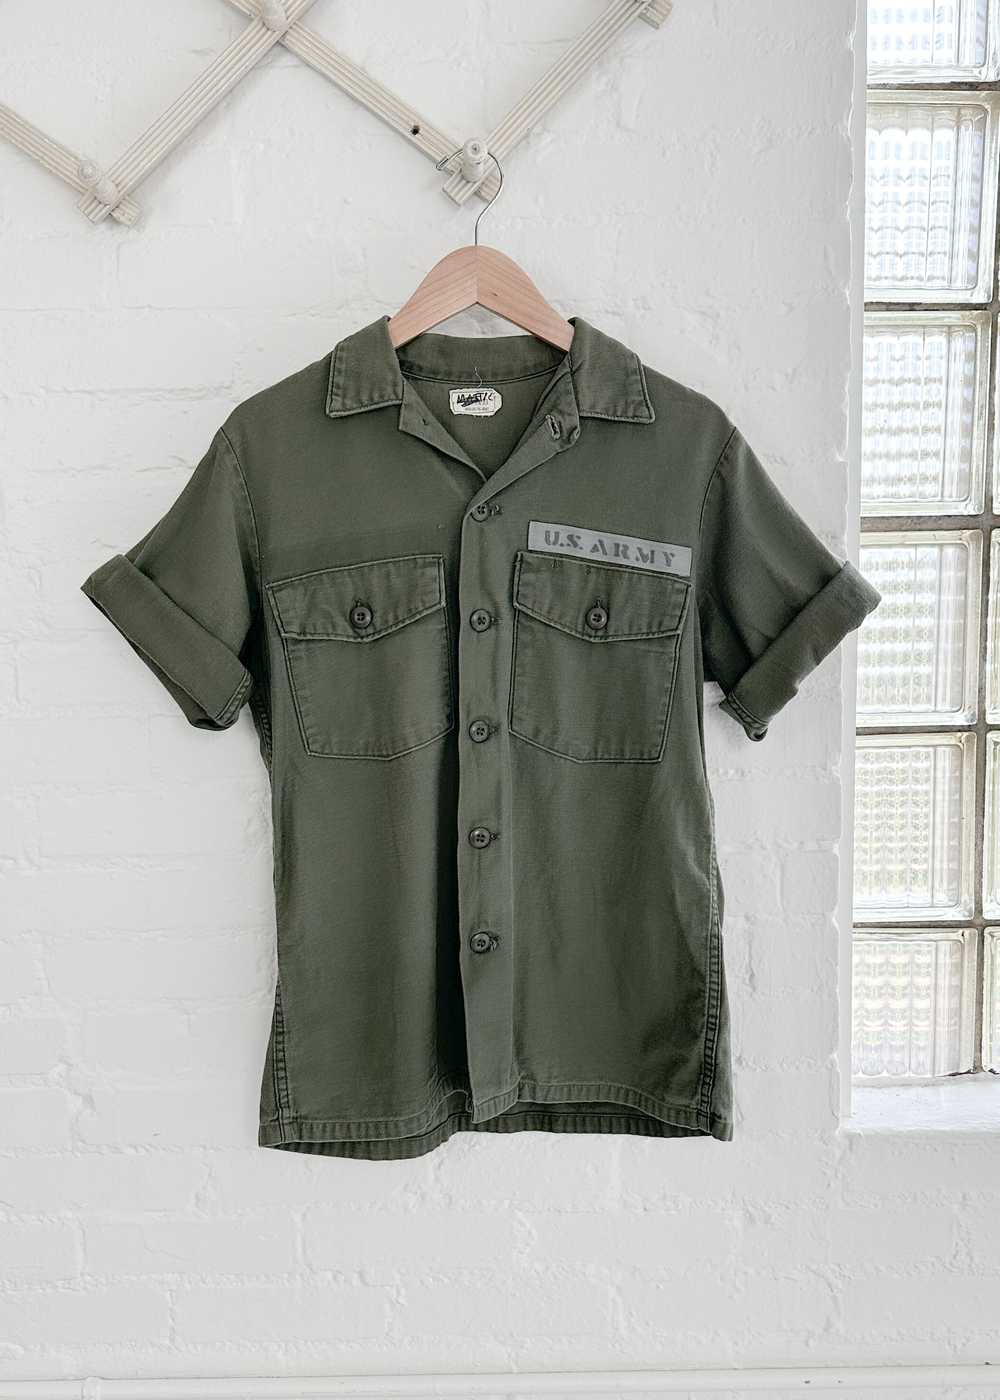 Vintage 1970s Short Sleeve Army Jacket - image 1